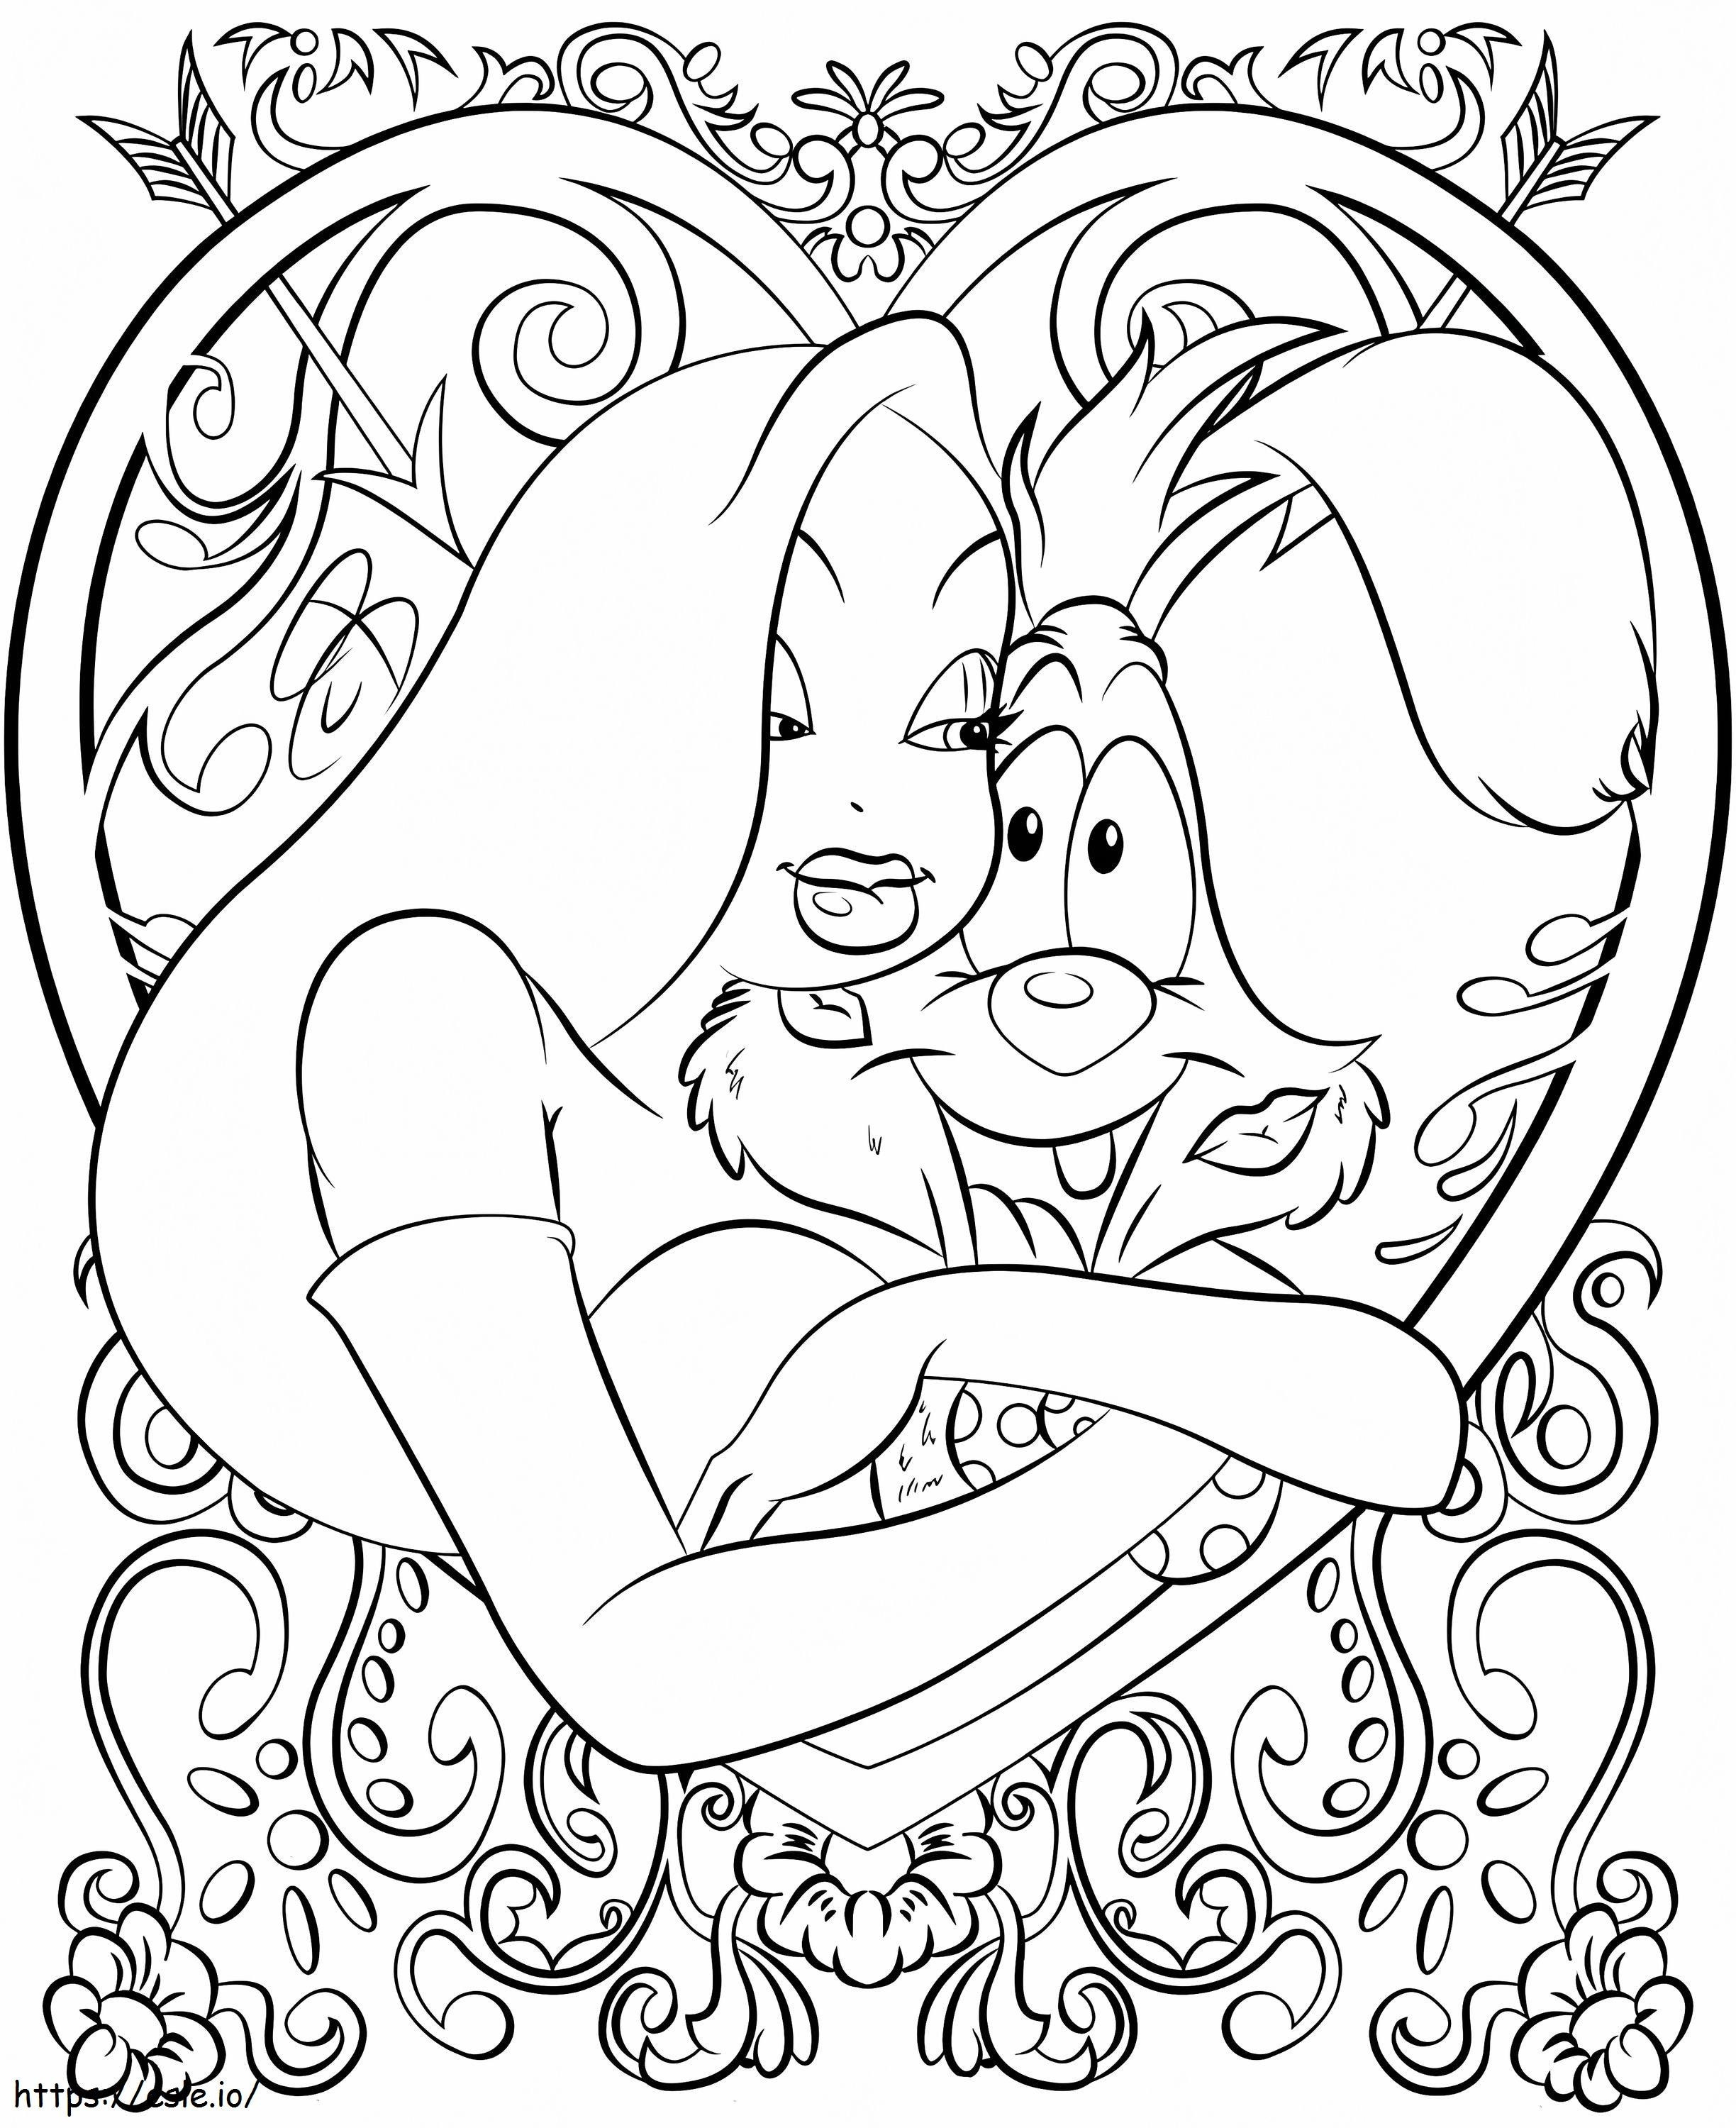 Coloriage Jessica Rabbit embrasse Roger Rabbit à imprimer dessin